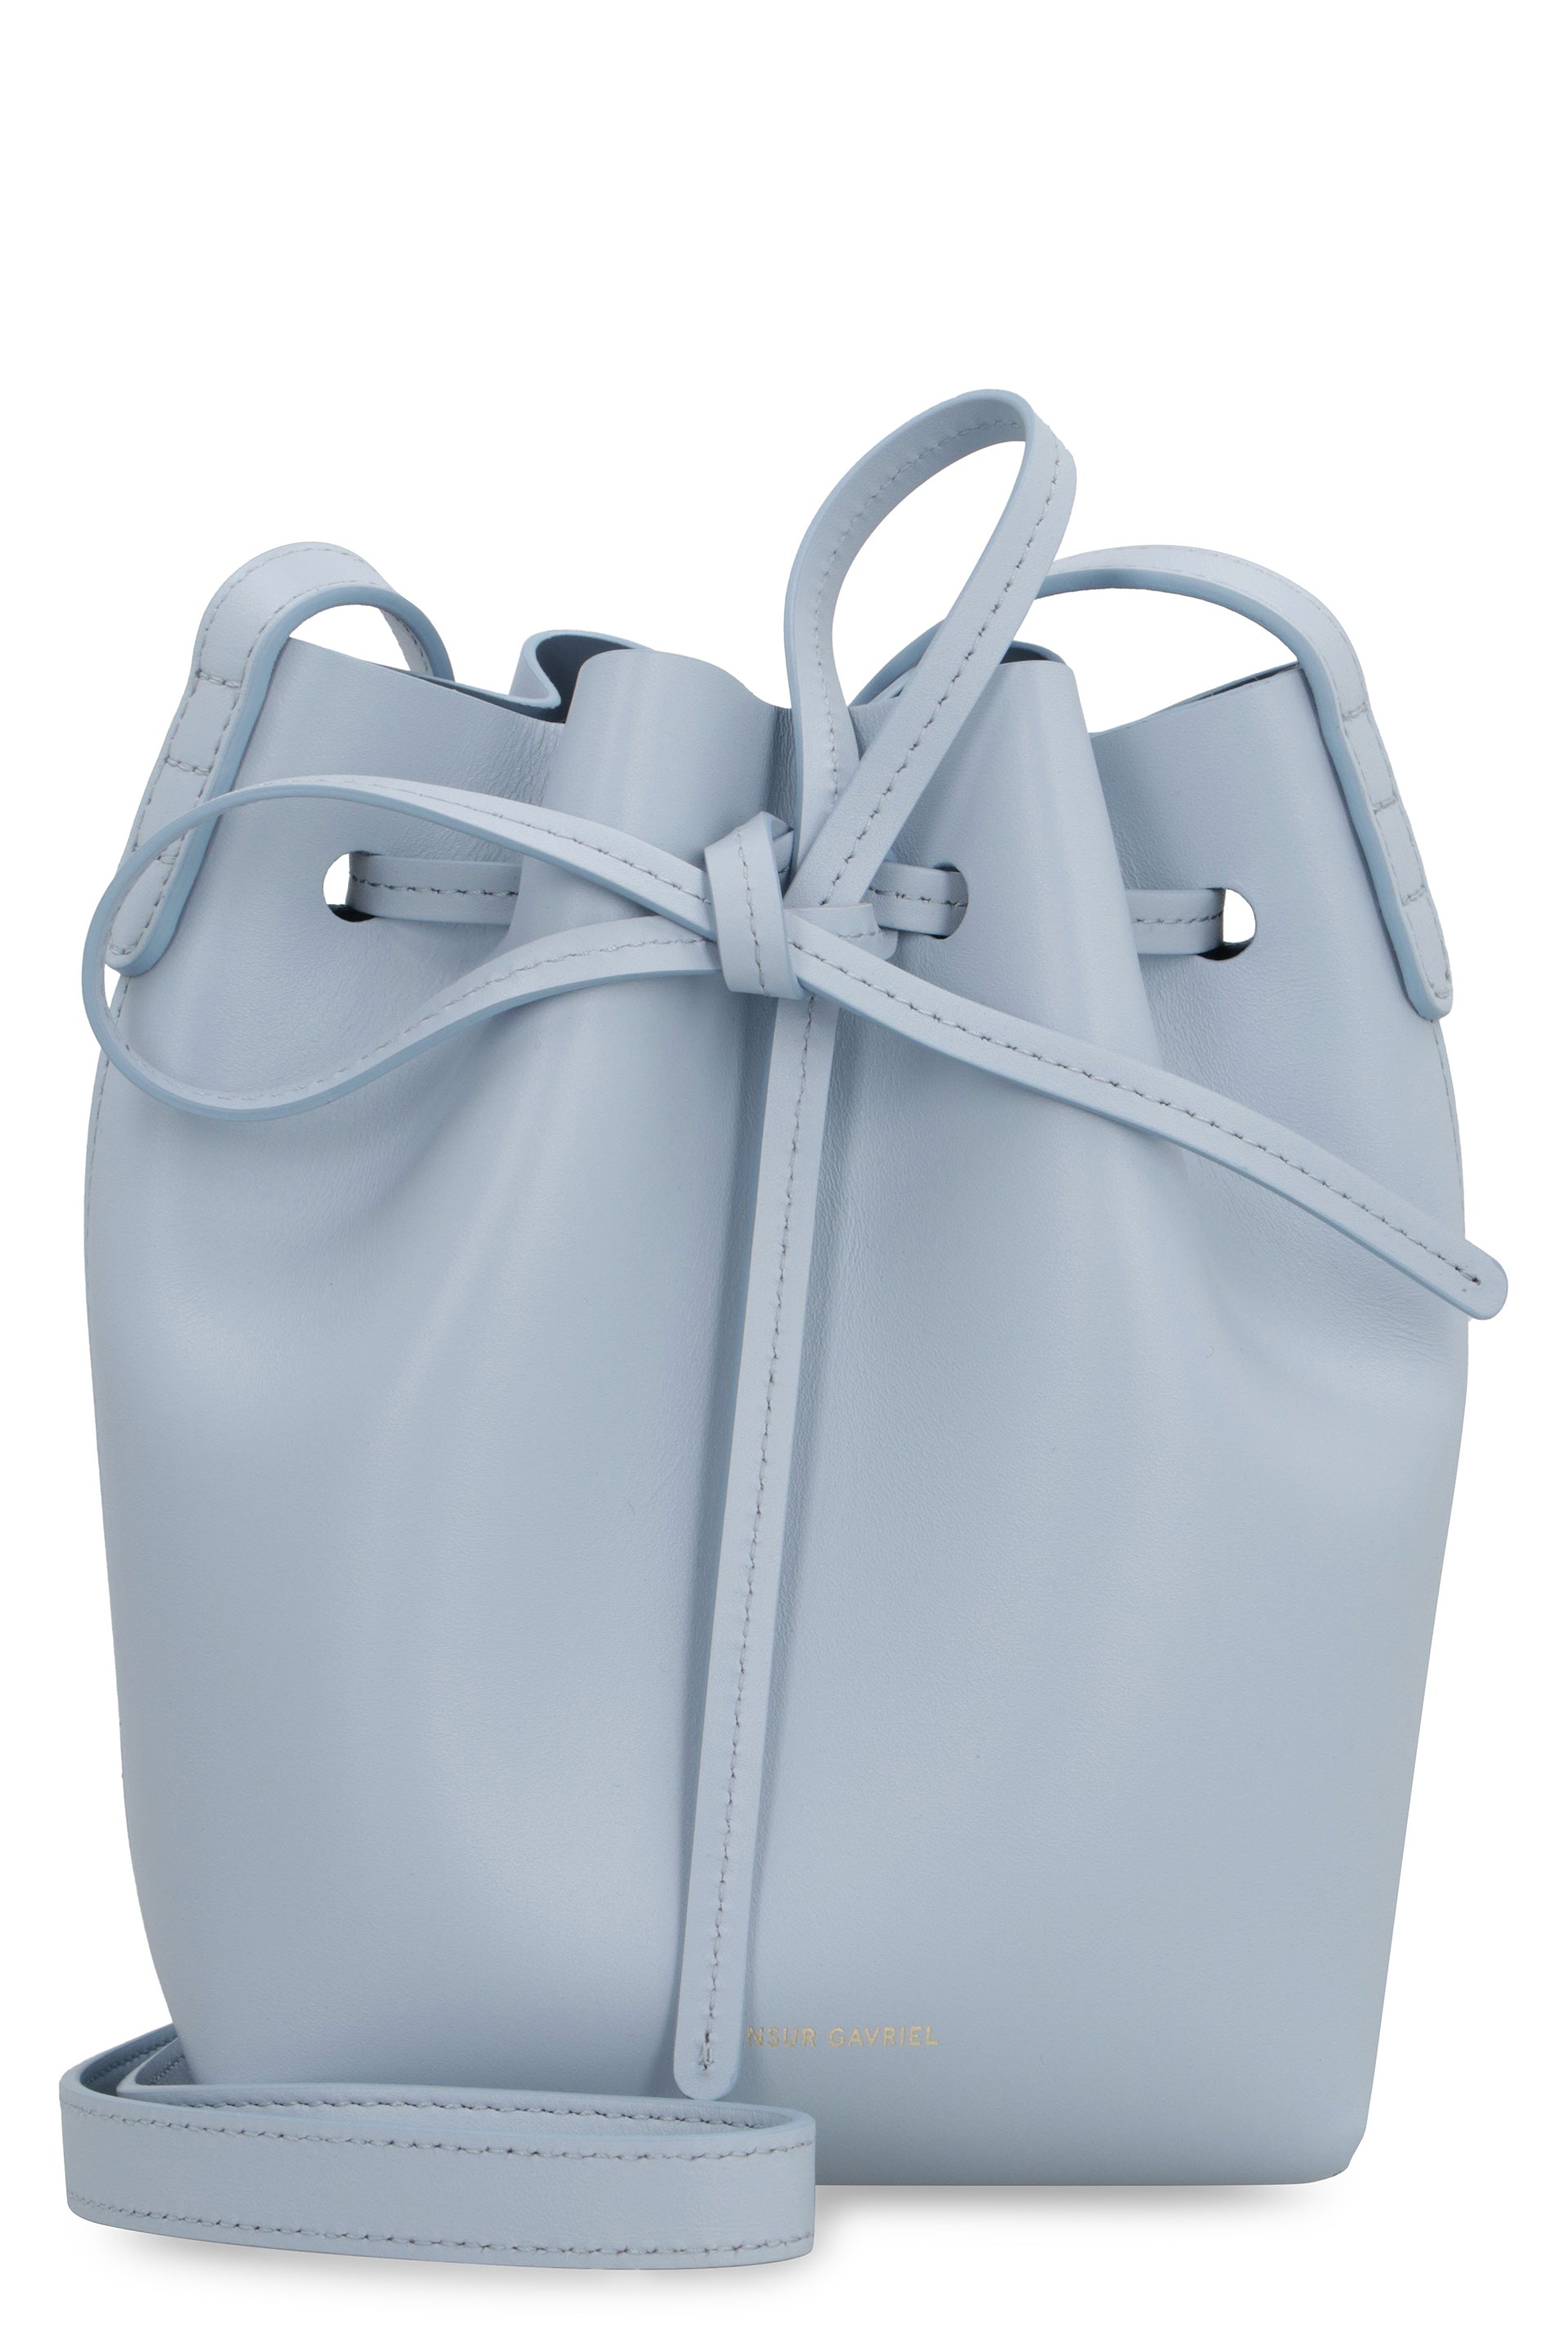 Mansur Gavriel - MG Mini Bucket Bag in Croc Embossed Leather 💛